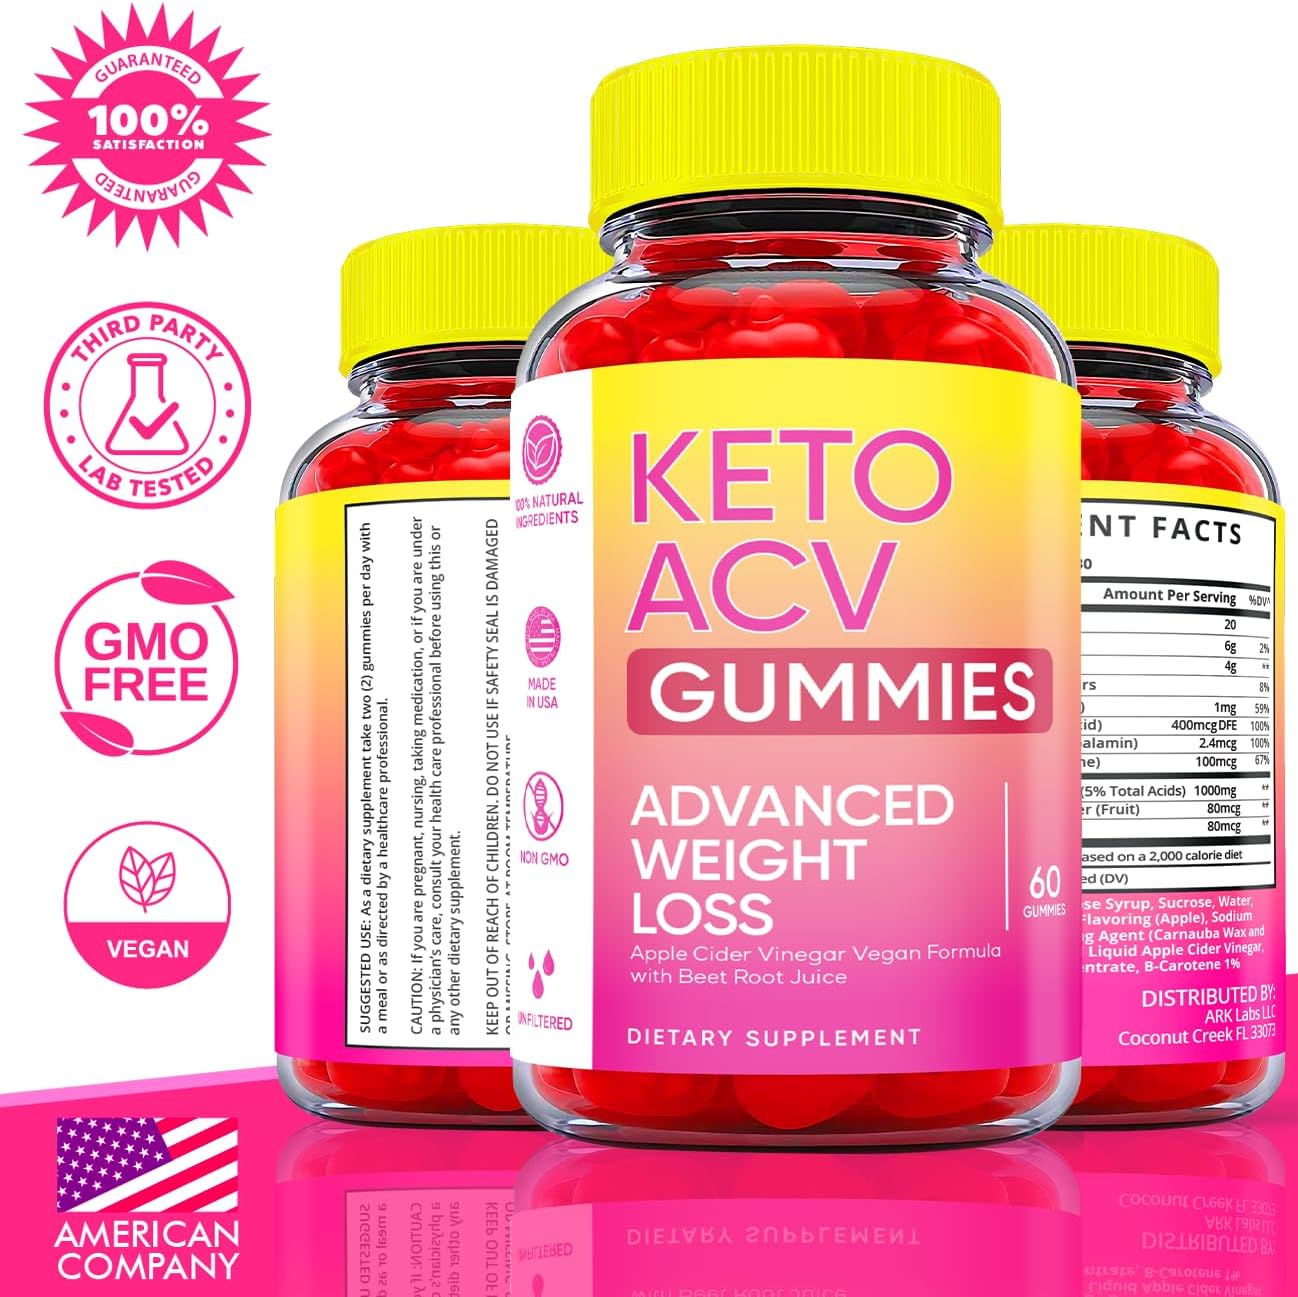 Keto ACV Gummies Advanced Weight Loss, Keto ACV Gummies, Advanced Keto ACV Gummies, ACV Keto Gummies for Weight Loss, Weight Loss Gummies, ACV Supplement Work Fast Women Plus Men (2 Pack)